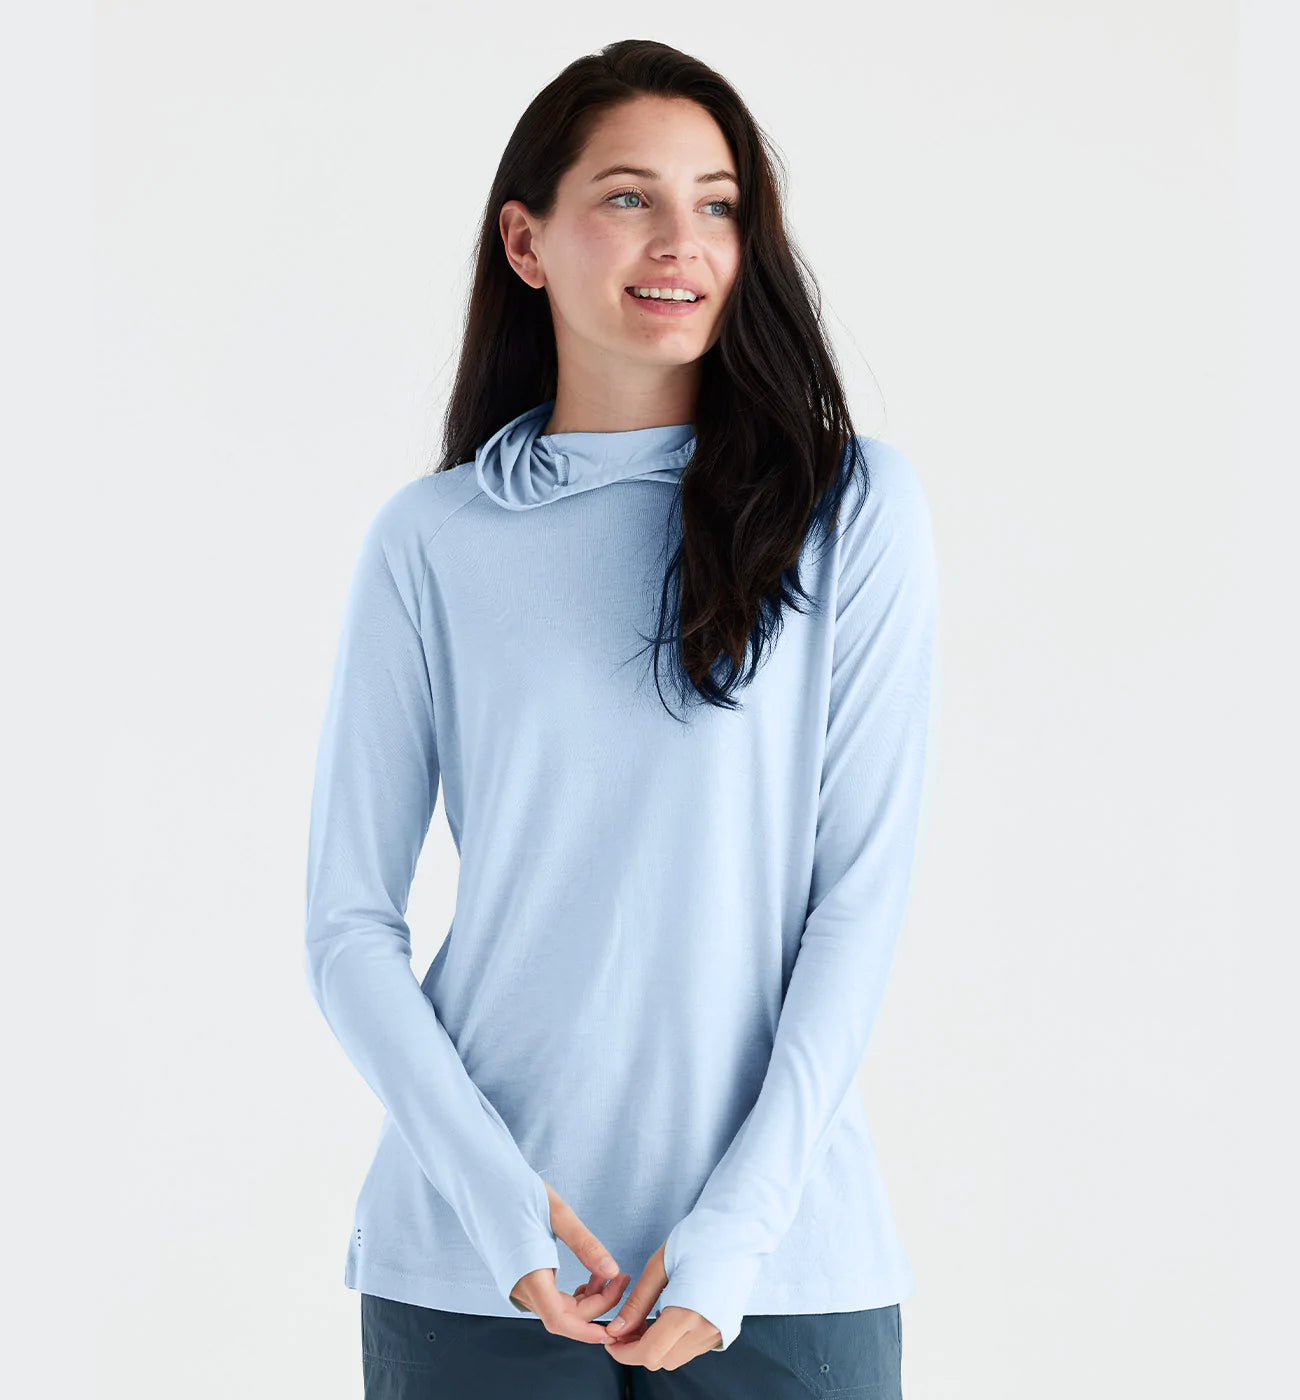 Lululemon Regular Size Hoodies & Sweatshirts 2 Size for Women for sale